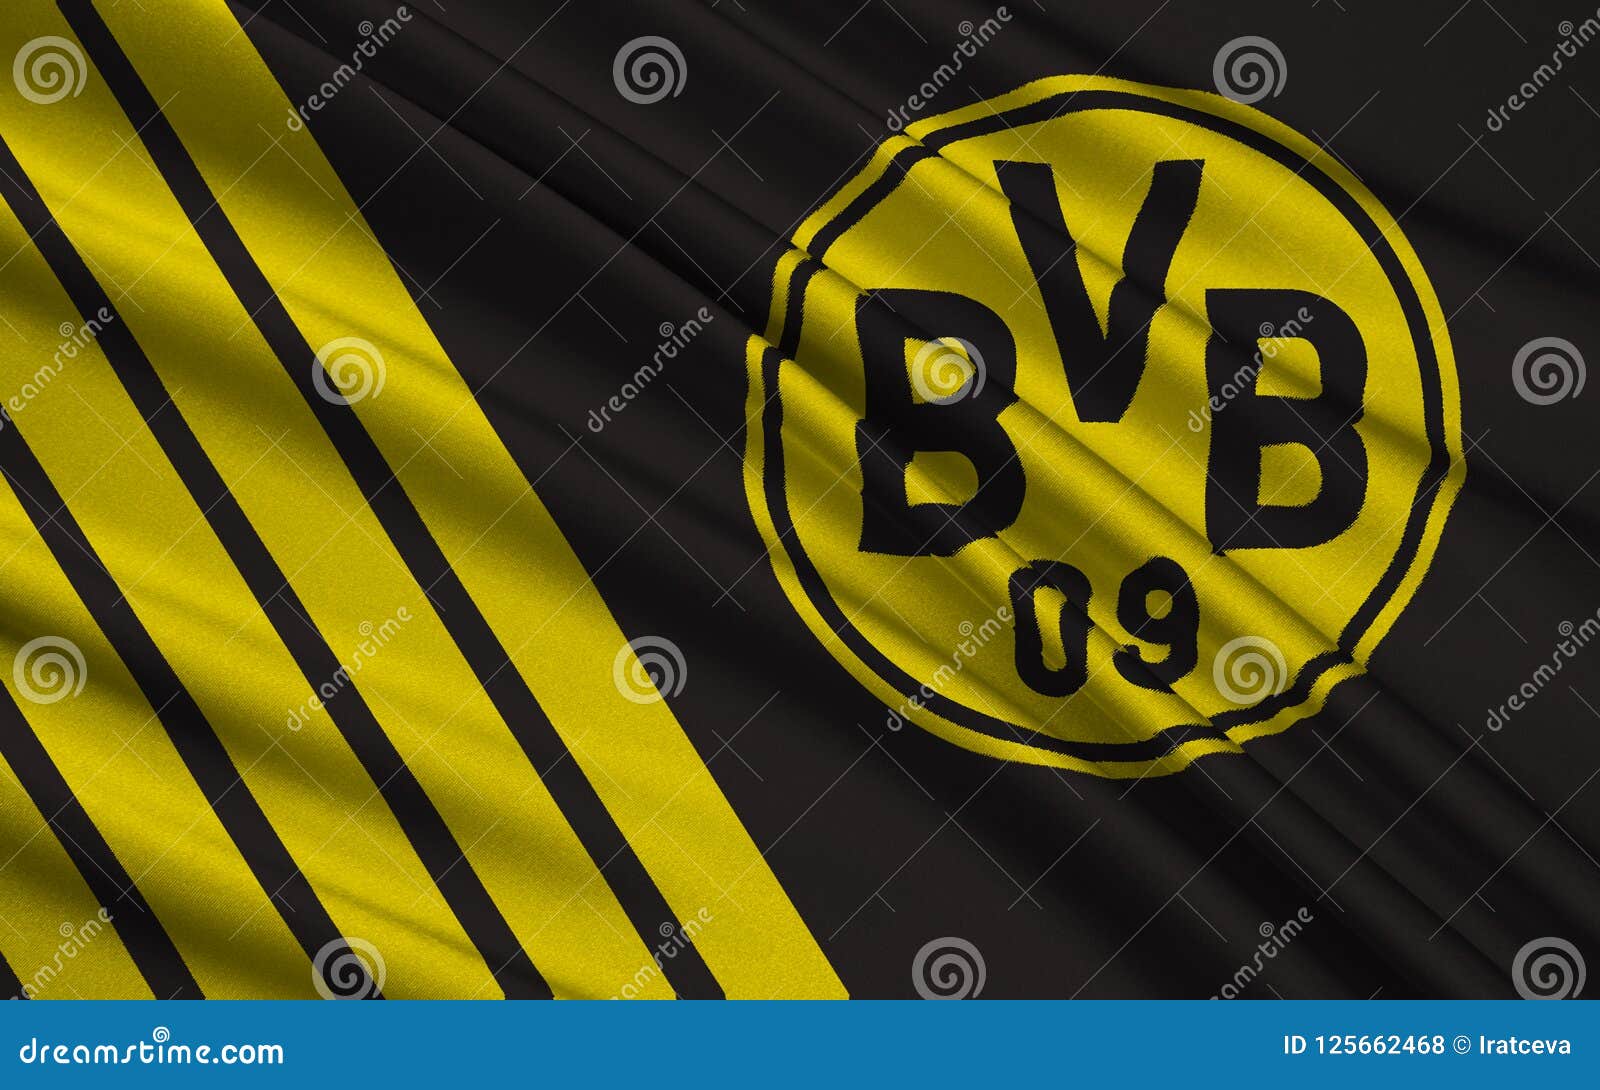 Borussia Dortmund Flag 3x5 BVB 09 Banner Soccer Football Club Man Cave 